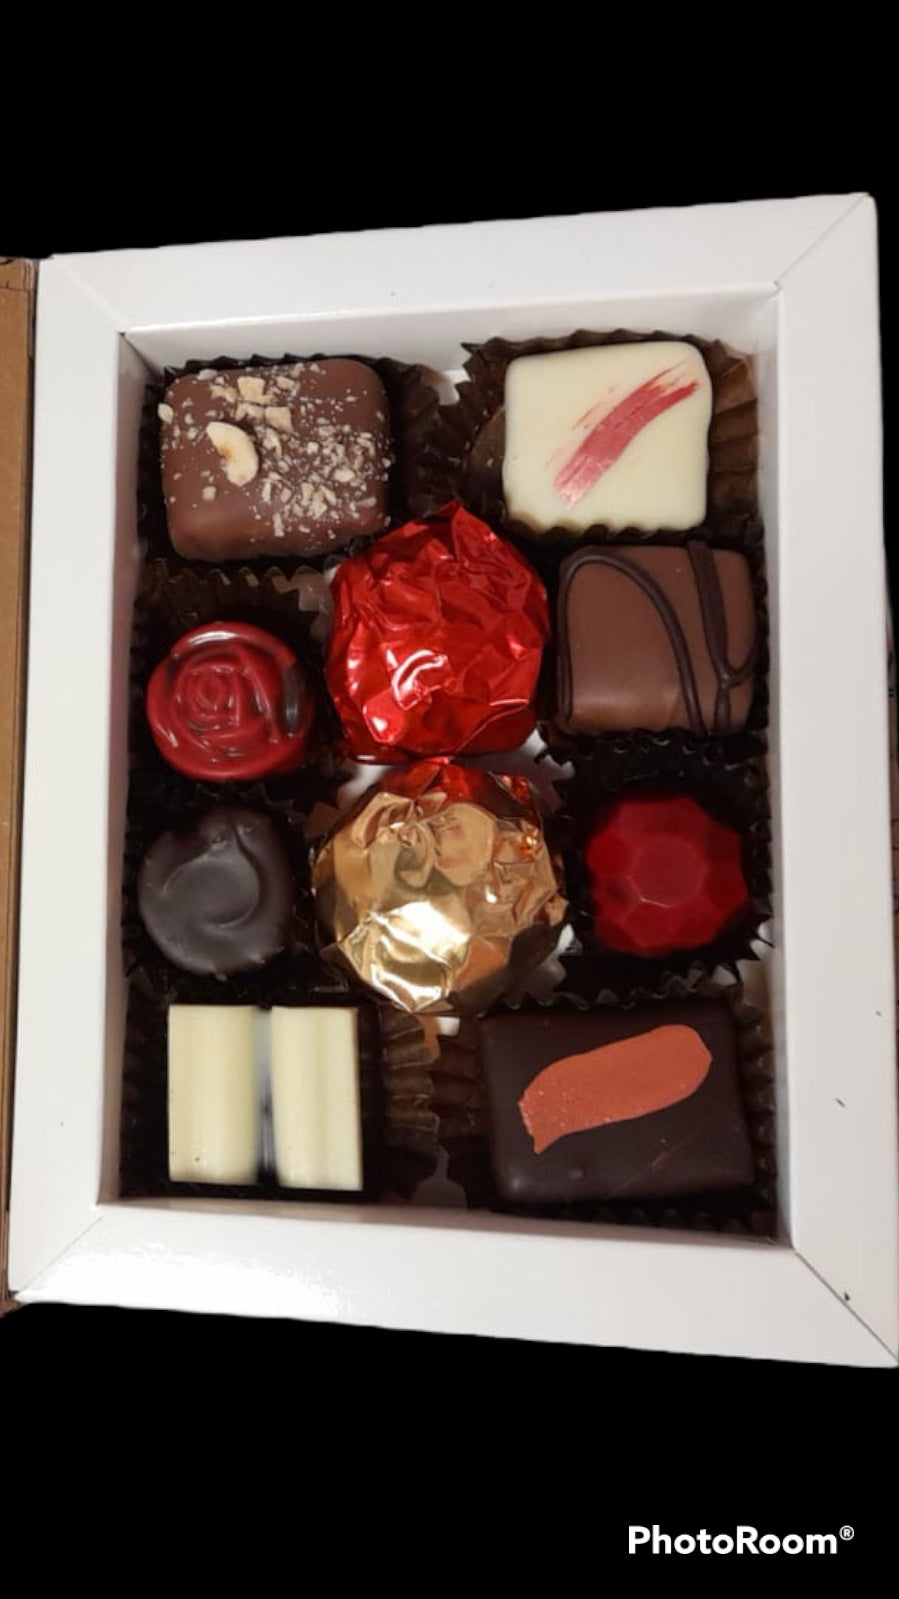 Assorted Chocolates Book-shaped box